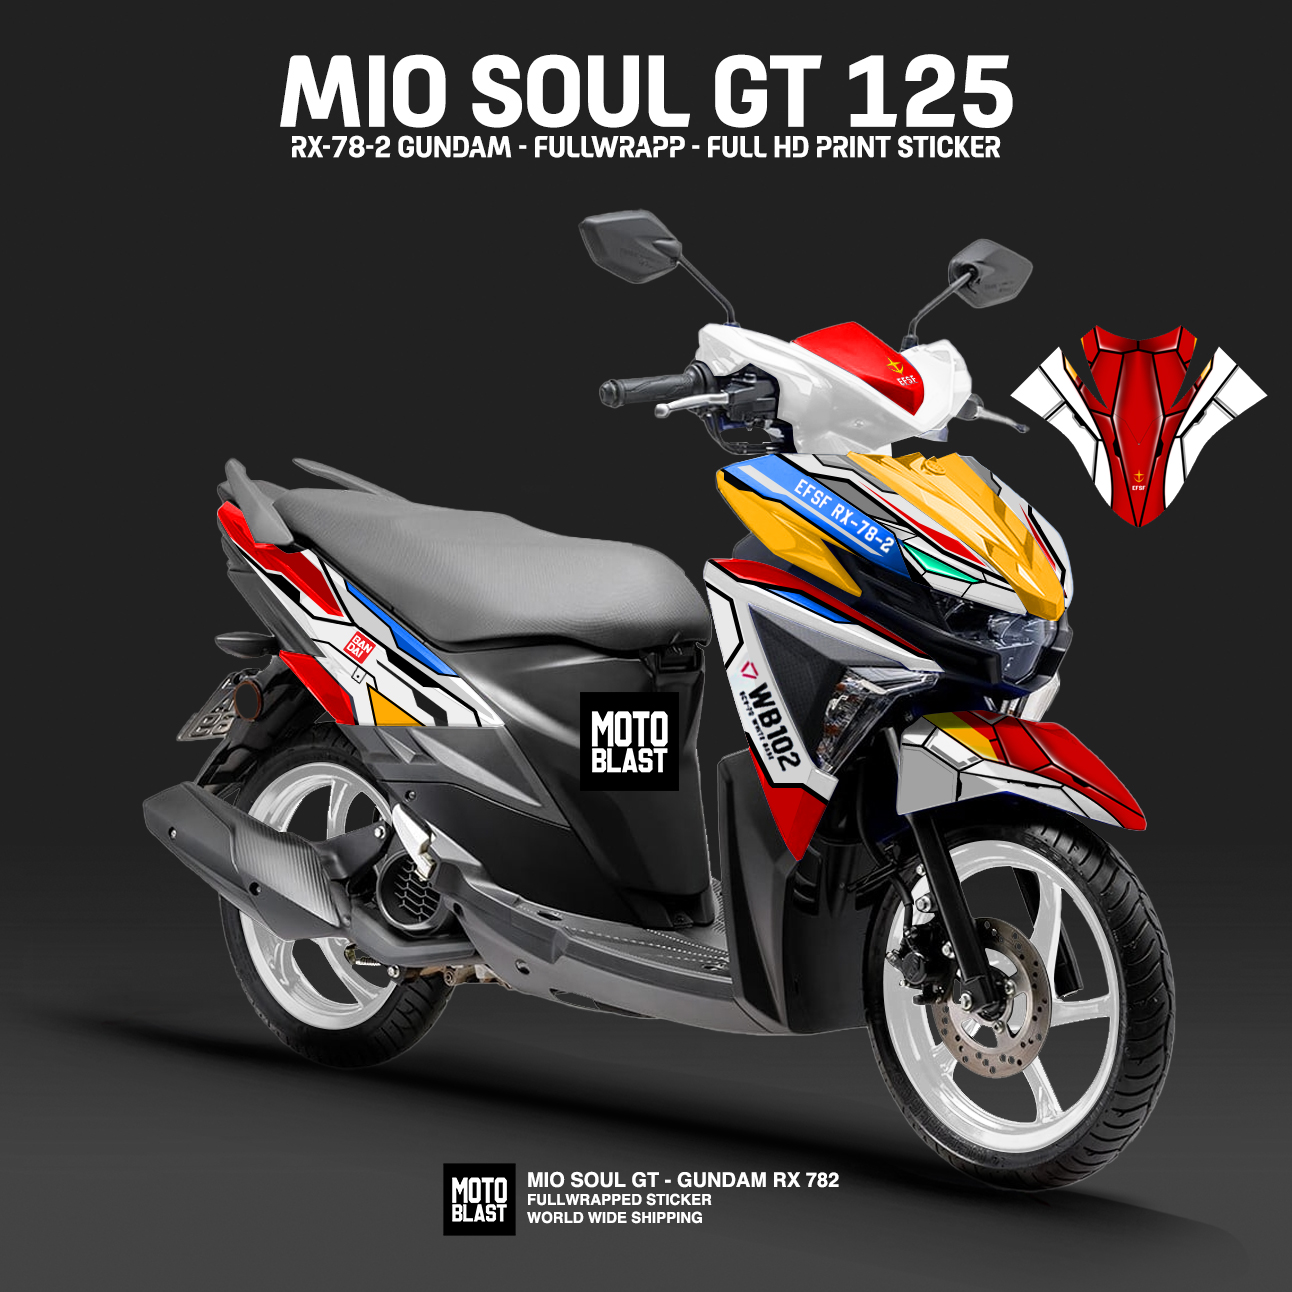 Mio Soul Gt 125 Modif. Modifikasi Striping Yamaha Mio Soul GT125 Gundam RX-782